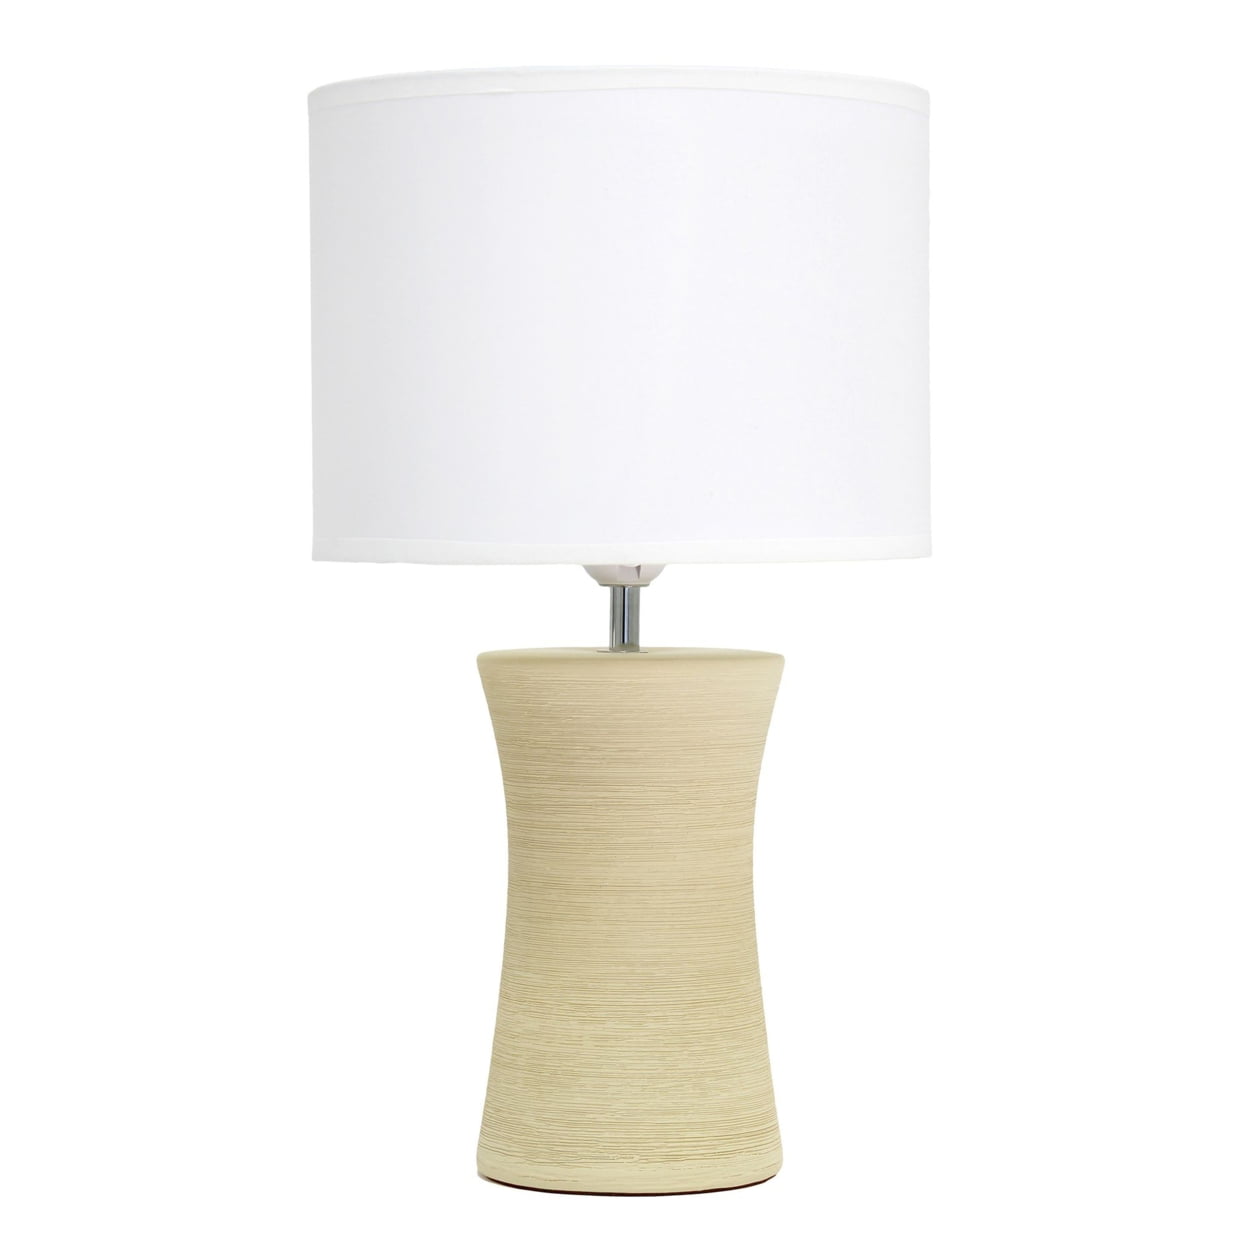 Simple Designs Ceramic Hourglass Table Lamp, Beige